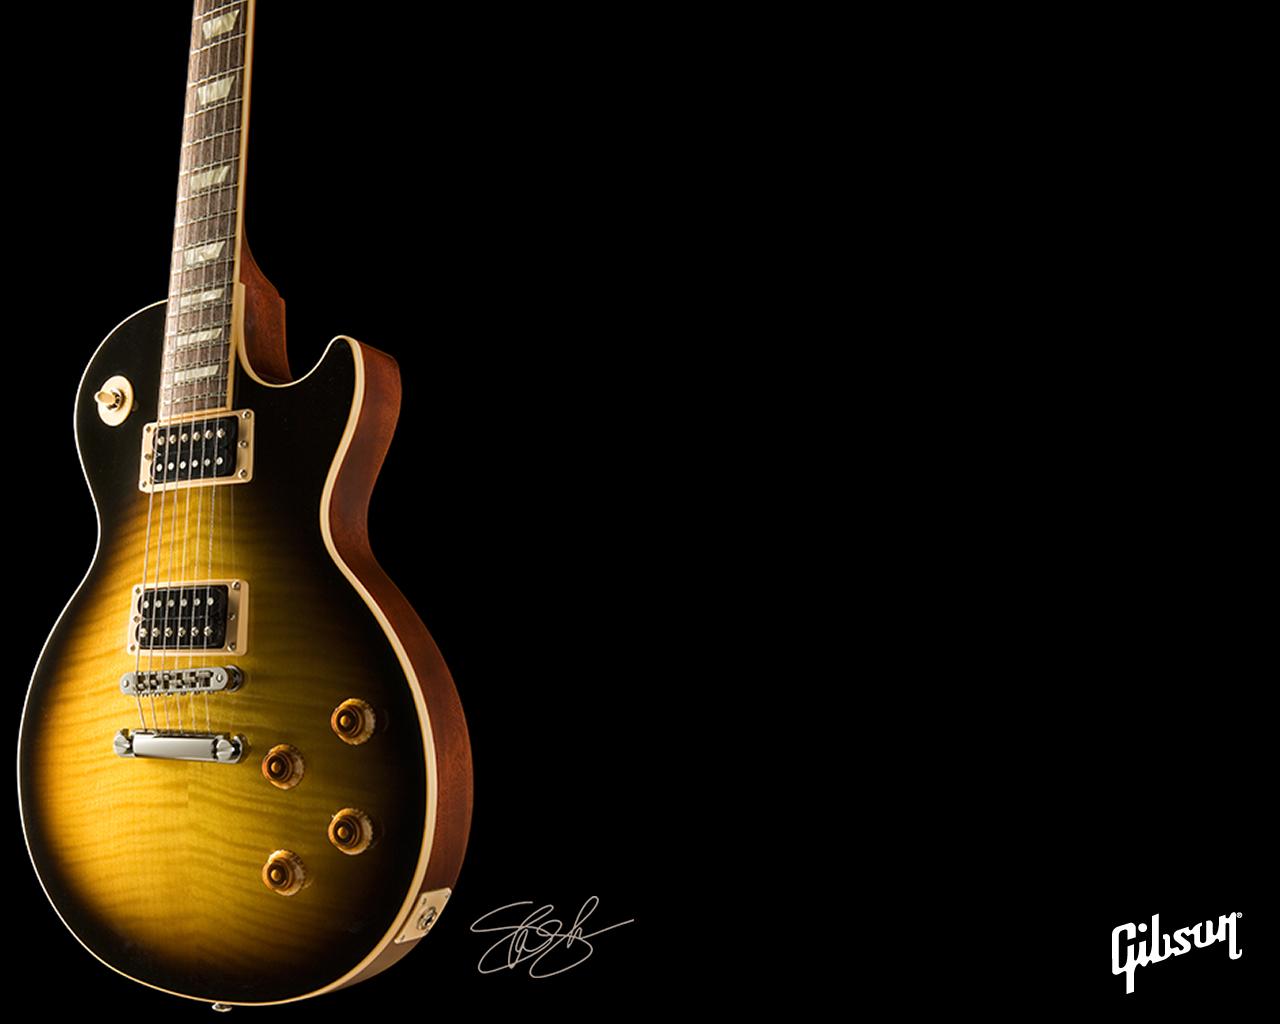 Gibson Guitar Wallpapers Top Free Gibson Guitar Backg - vrogue.co